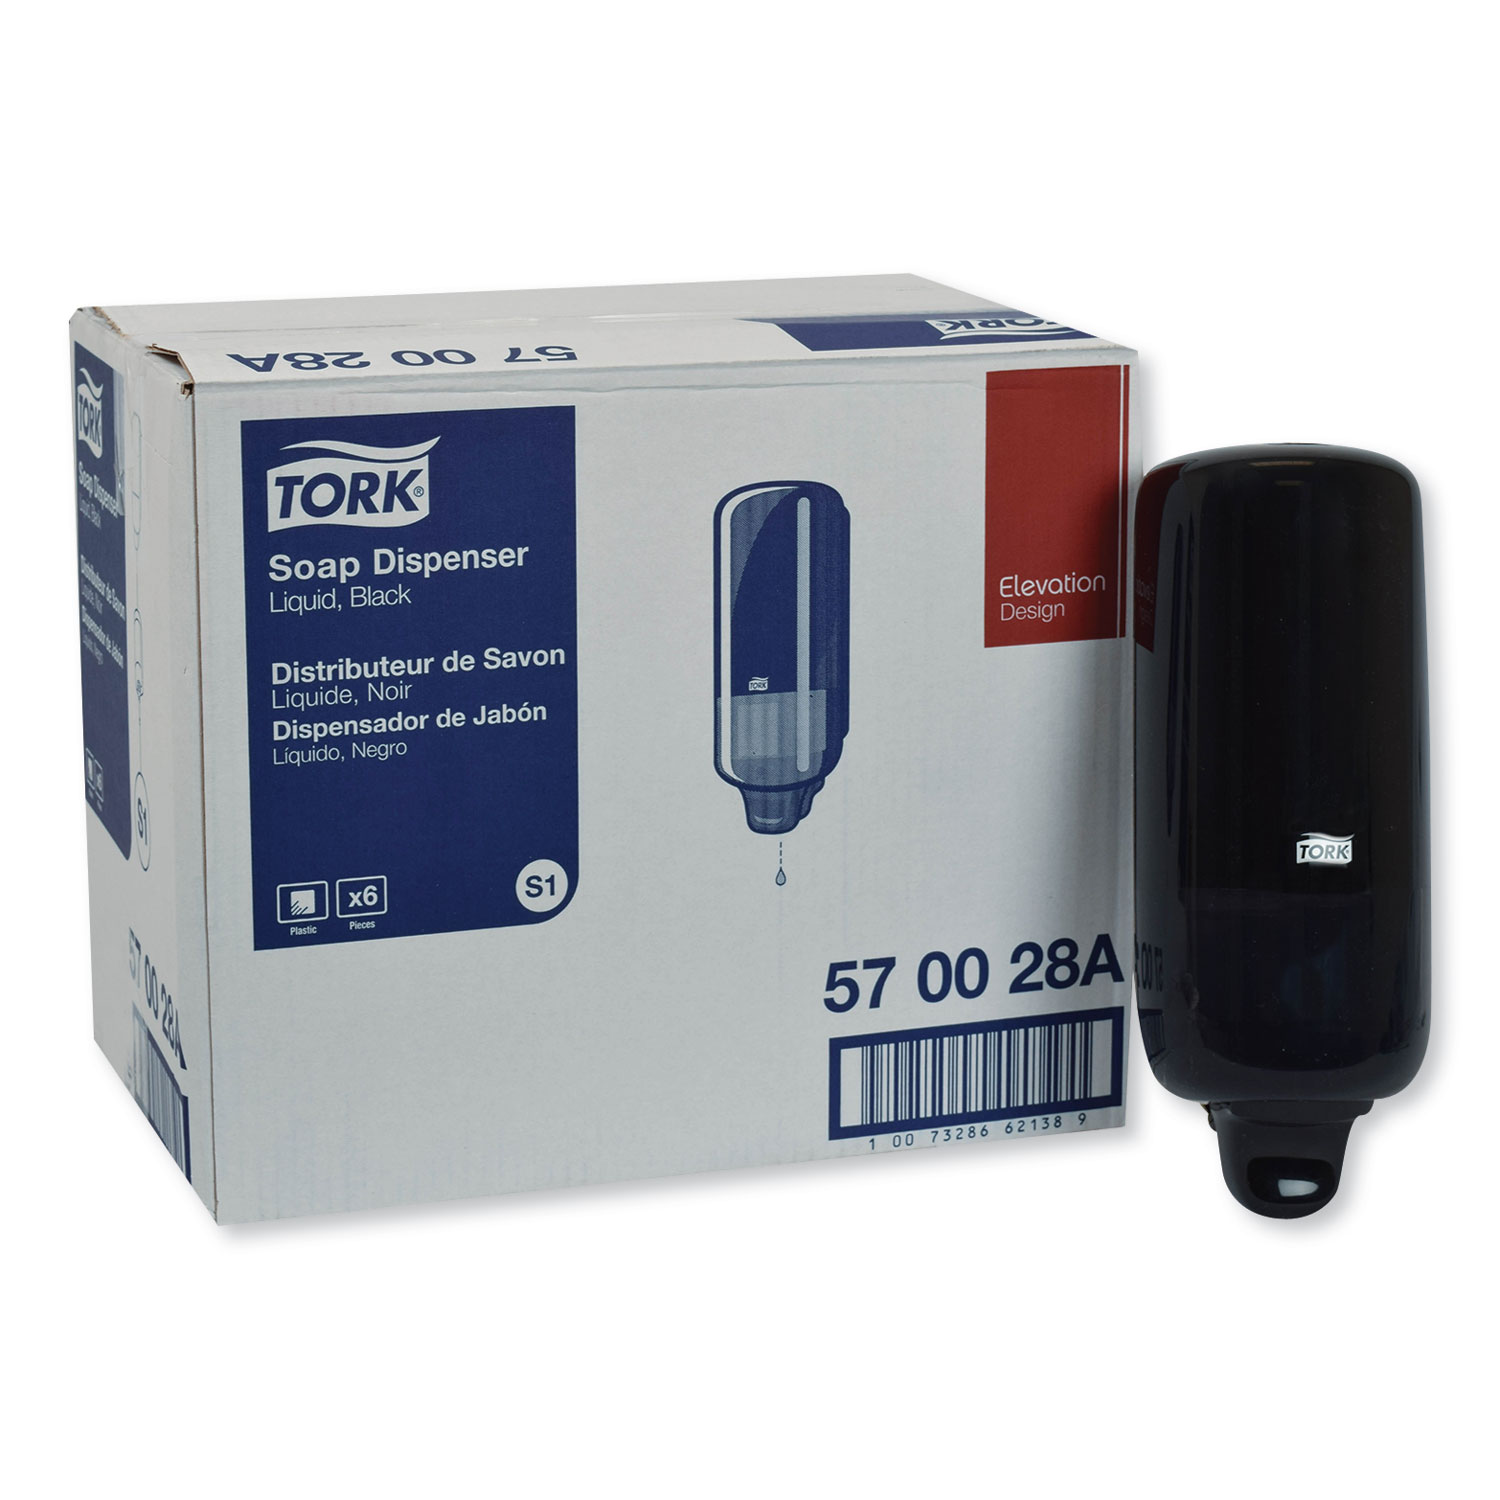  Tork 570028A Elevation Liquid Skincare Dispenser, 1 L Bottle; 33 oz Bottle, 4.4 x 4.5 x 11.5, Black (TRK570028A) 